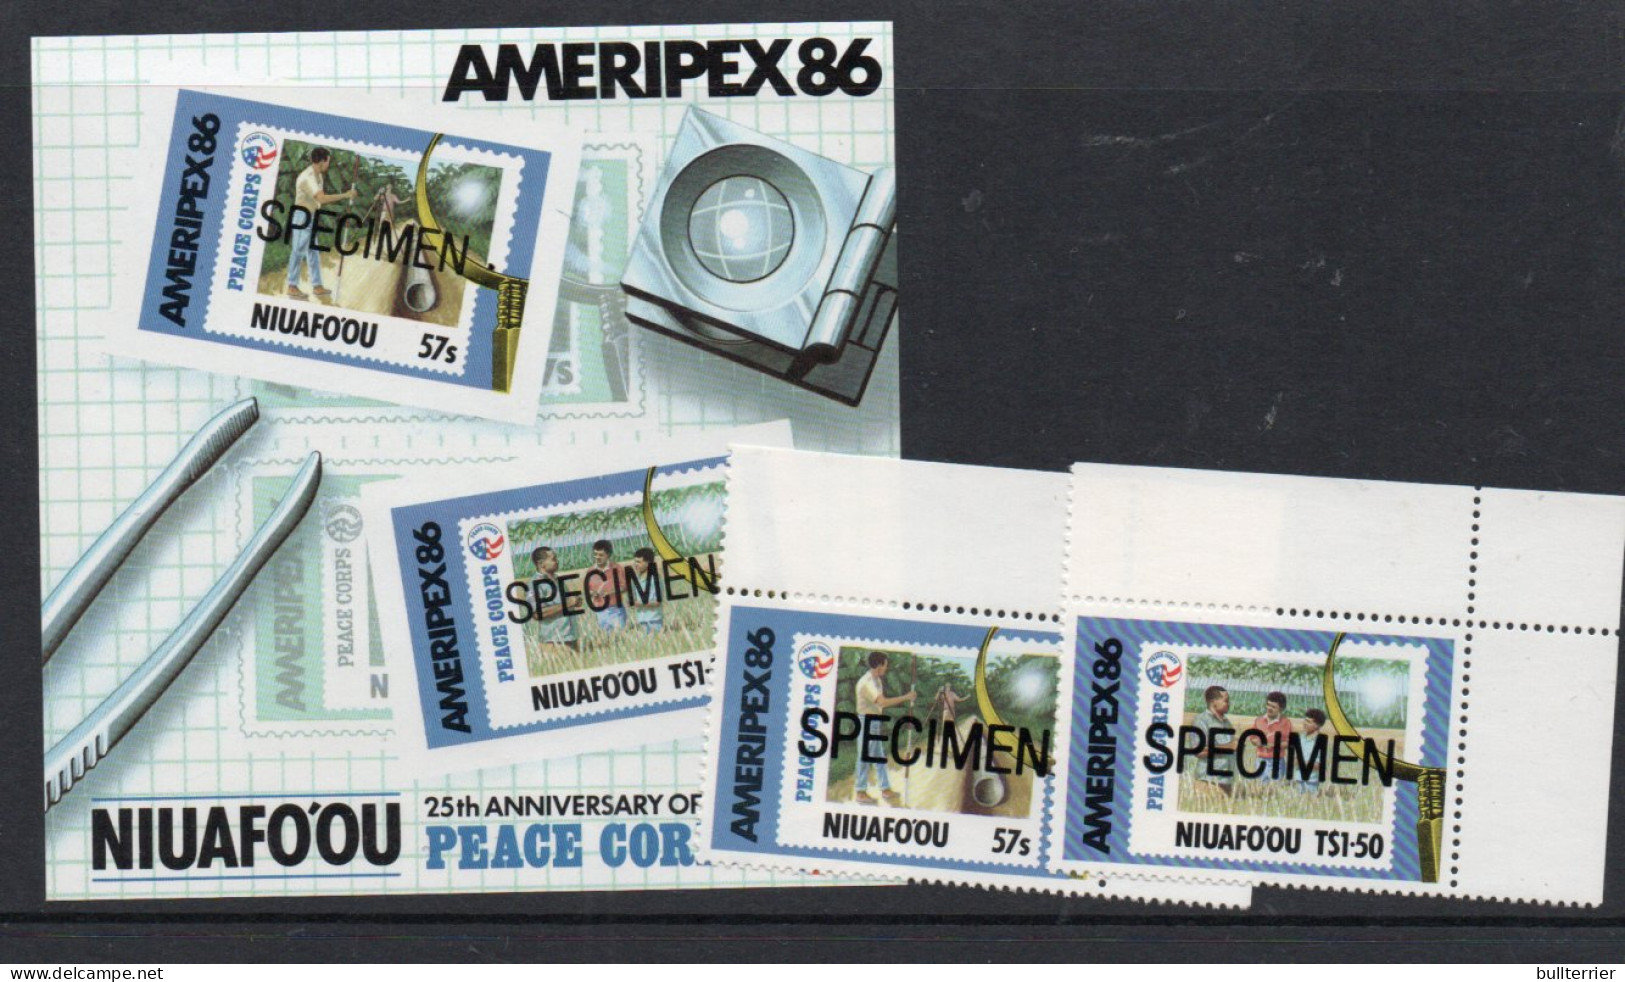 NIUAFOOU - 1986- AMERIPEX SET OF 2 + S/SHEET  " SPECIMENS"  MINT NEVER HINGED  - Autres - Océanie